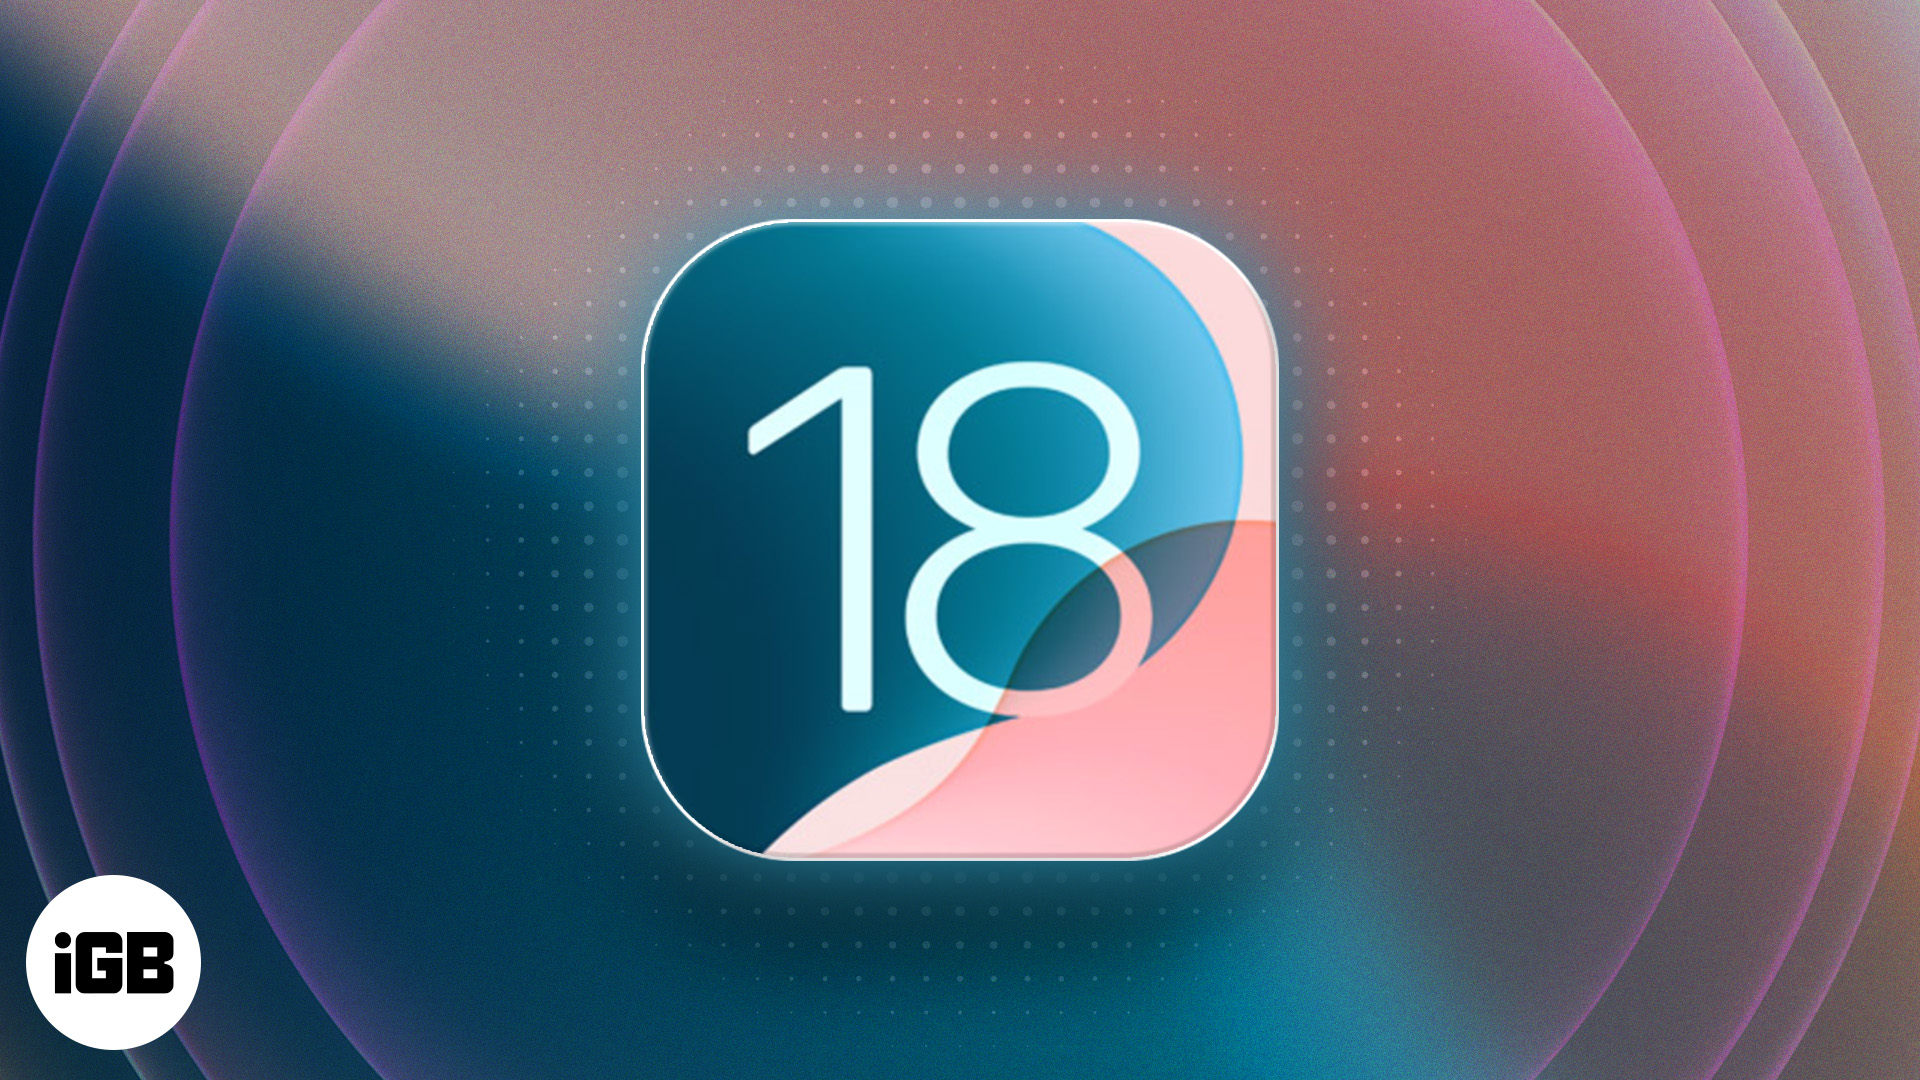 Best iOS 18 features